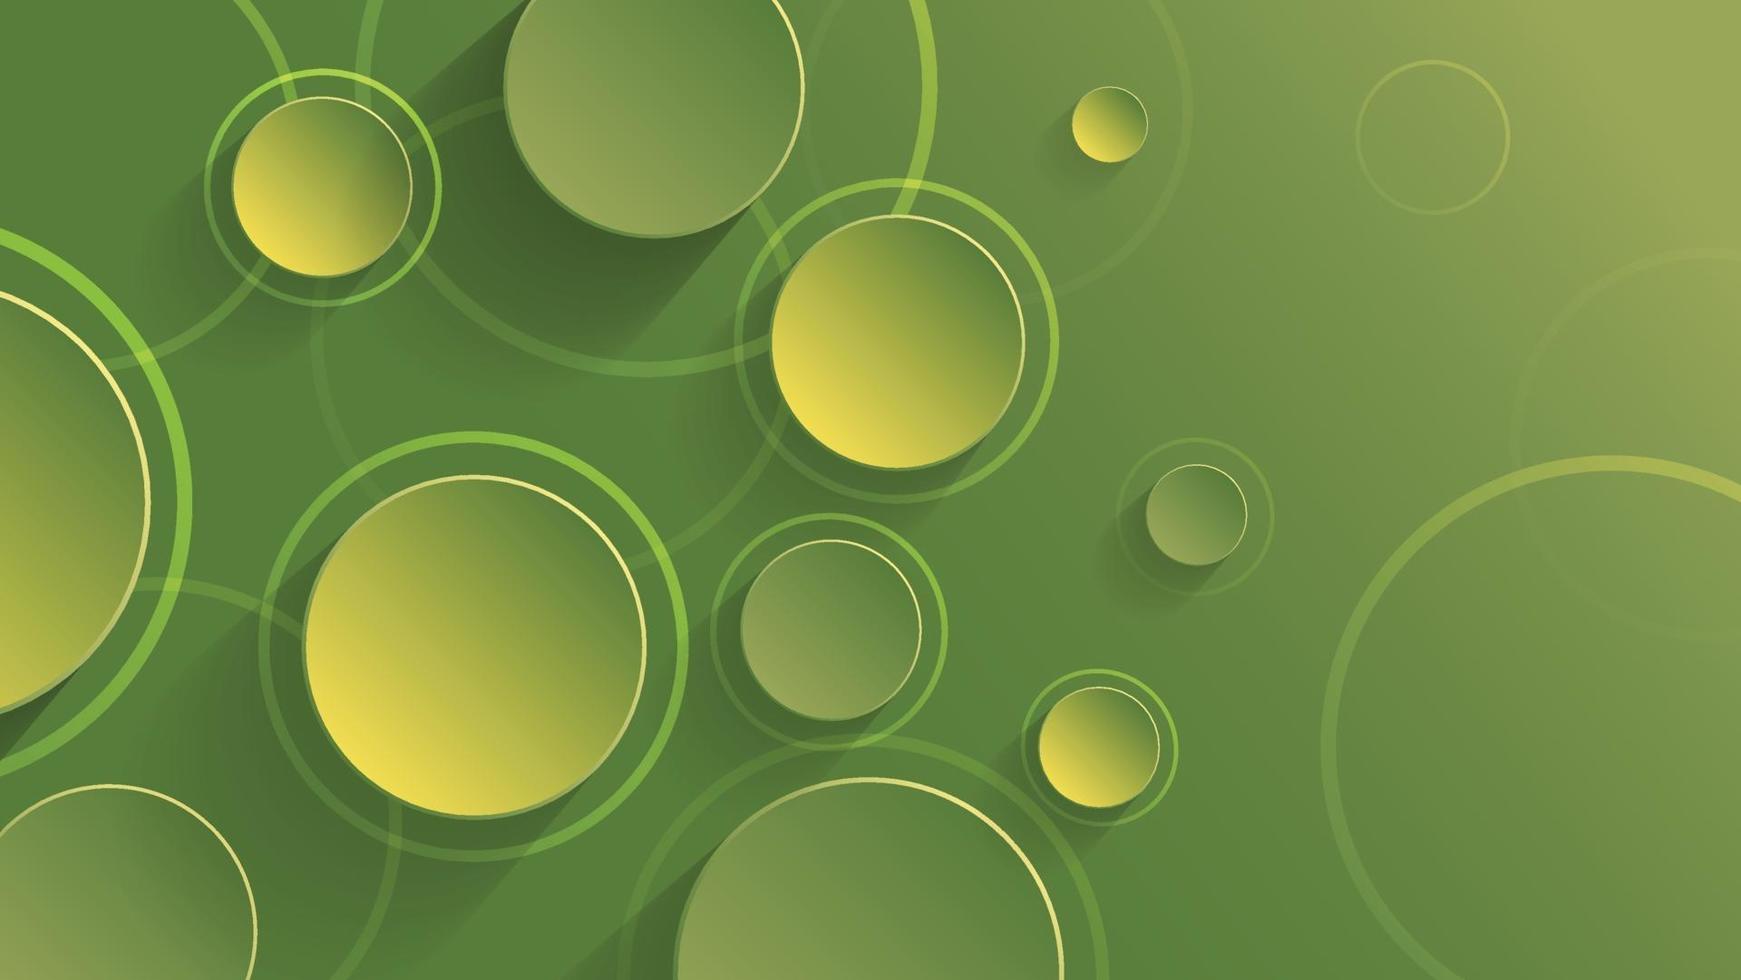 fundo geométrico abstrato com fundo verde do círculo gradiente vetor